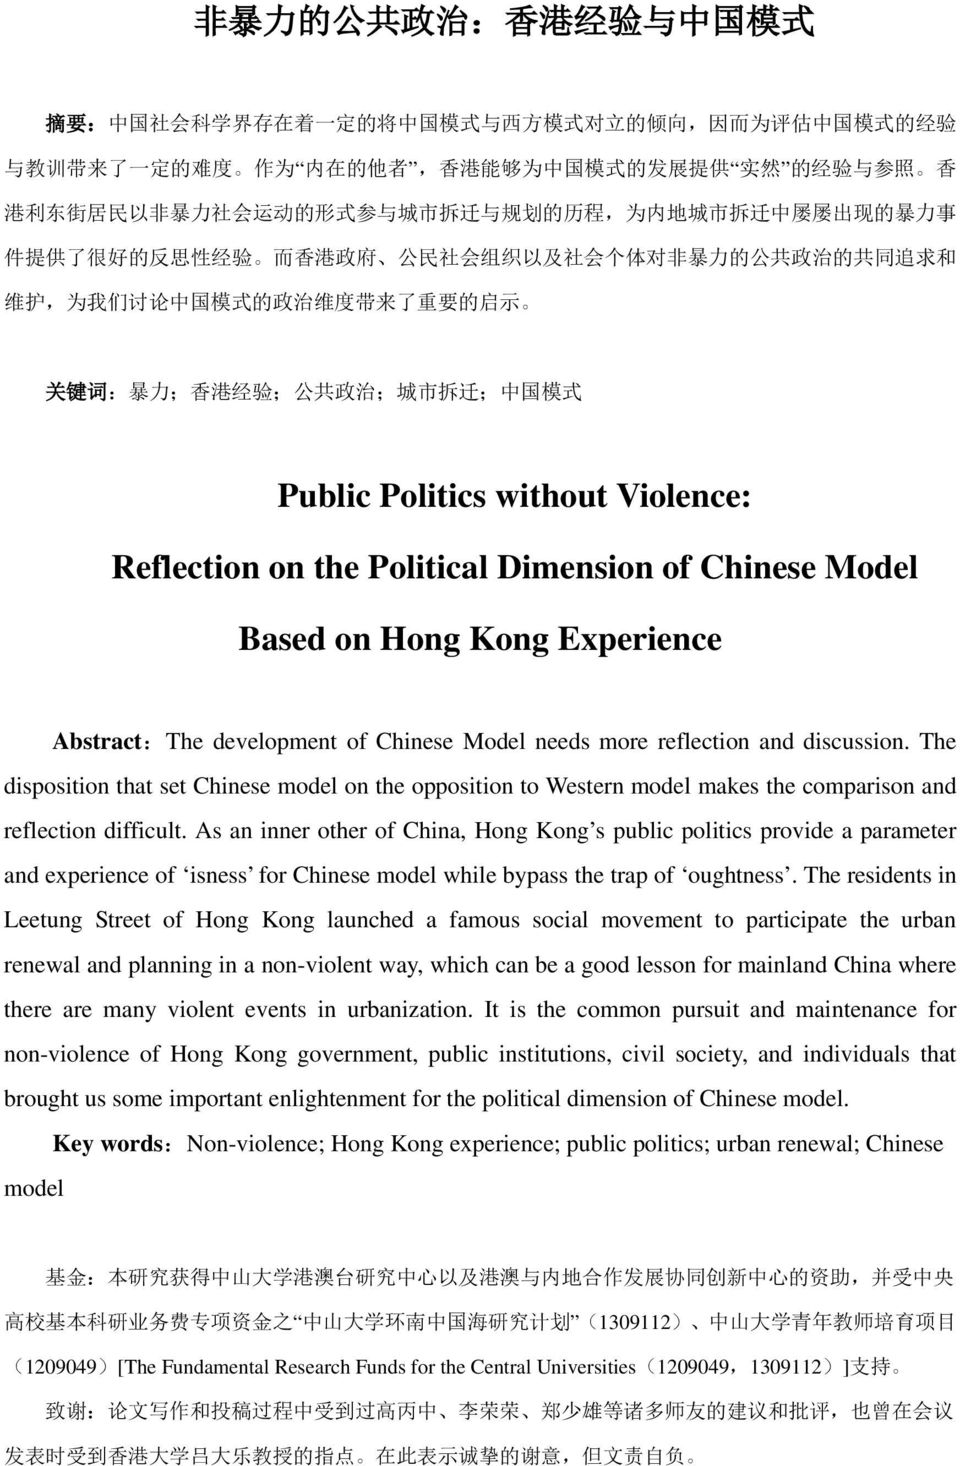 中 国 模 式 的 政 治 维 度 带 来 了 重 要 的 启 示 关 键 词 : 暴 力 ; 香 港 经 验 ; 公 共 政 治 ; 城 市 拆 迁 ; 中 国 模 式 Public Politics without Violence: Reflection on the Political Dimension of Chinese Model Based on Hong Kong